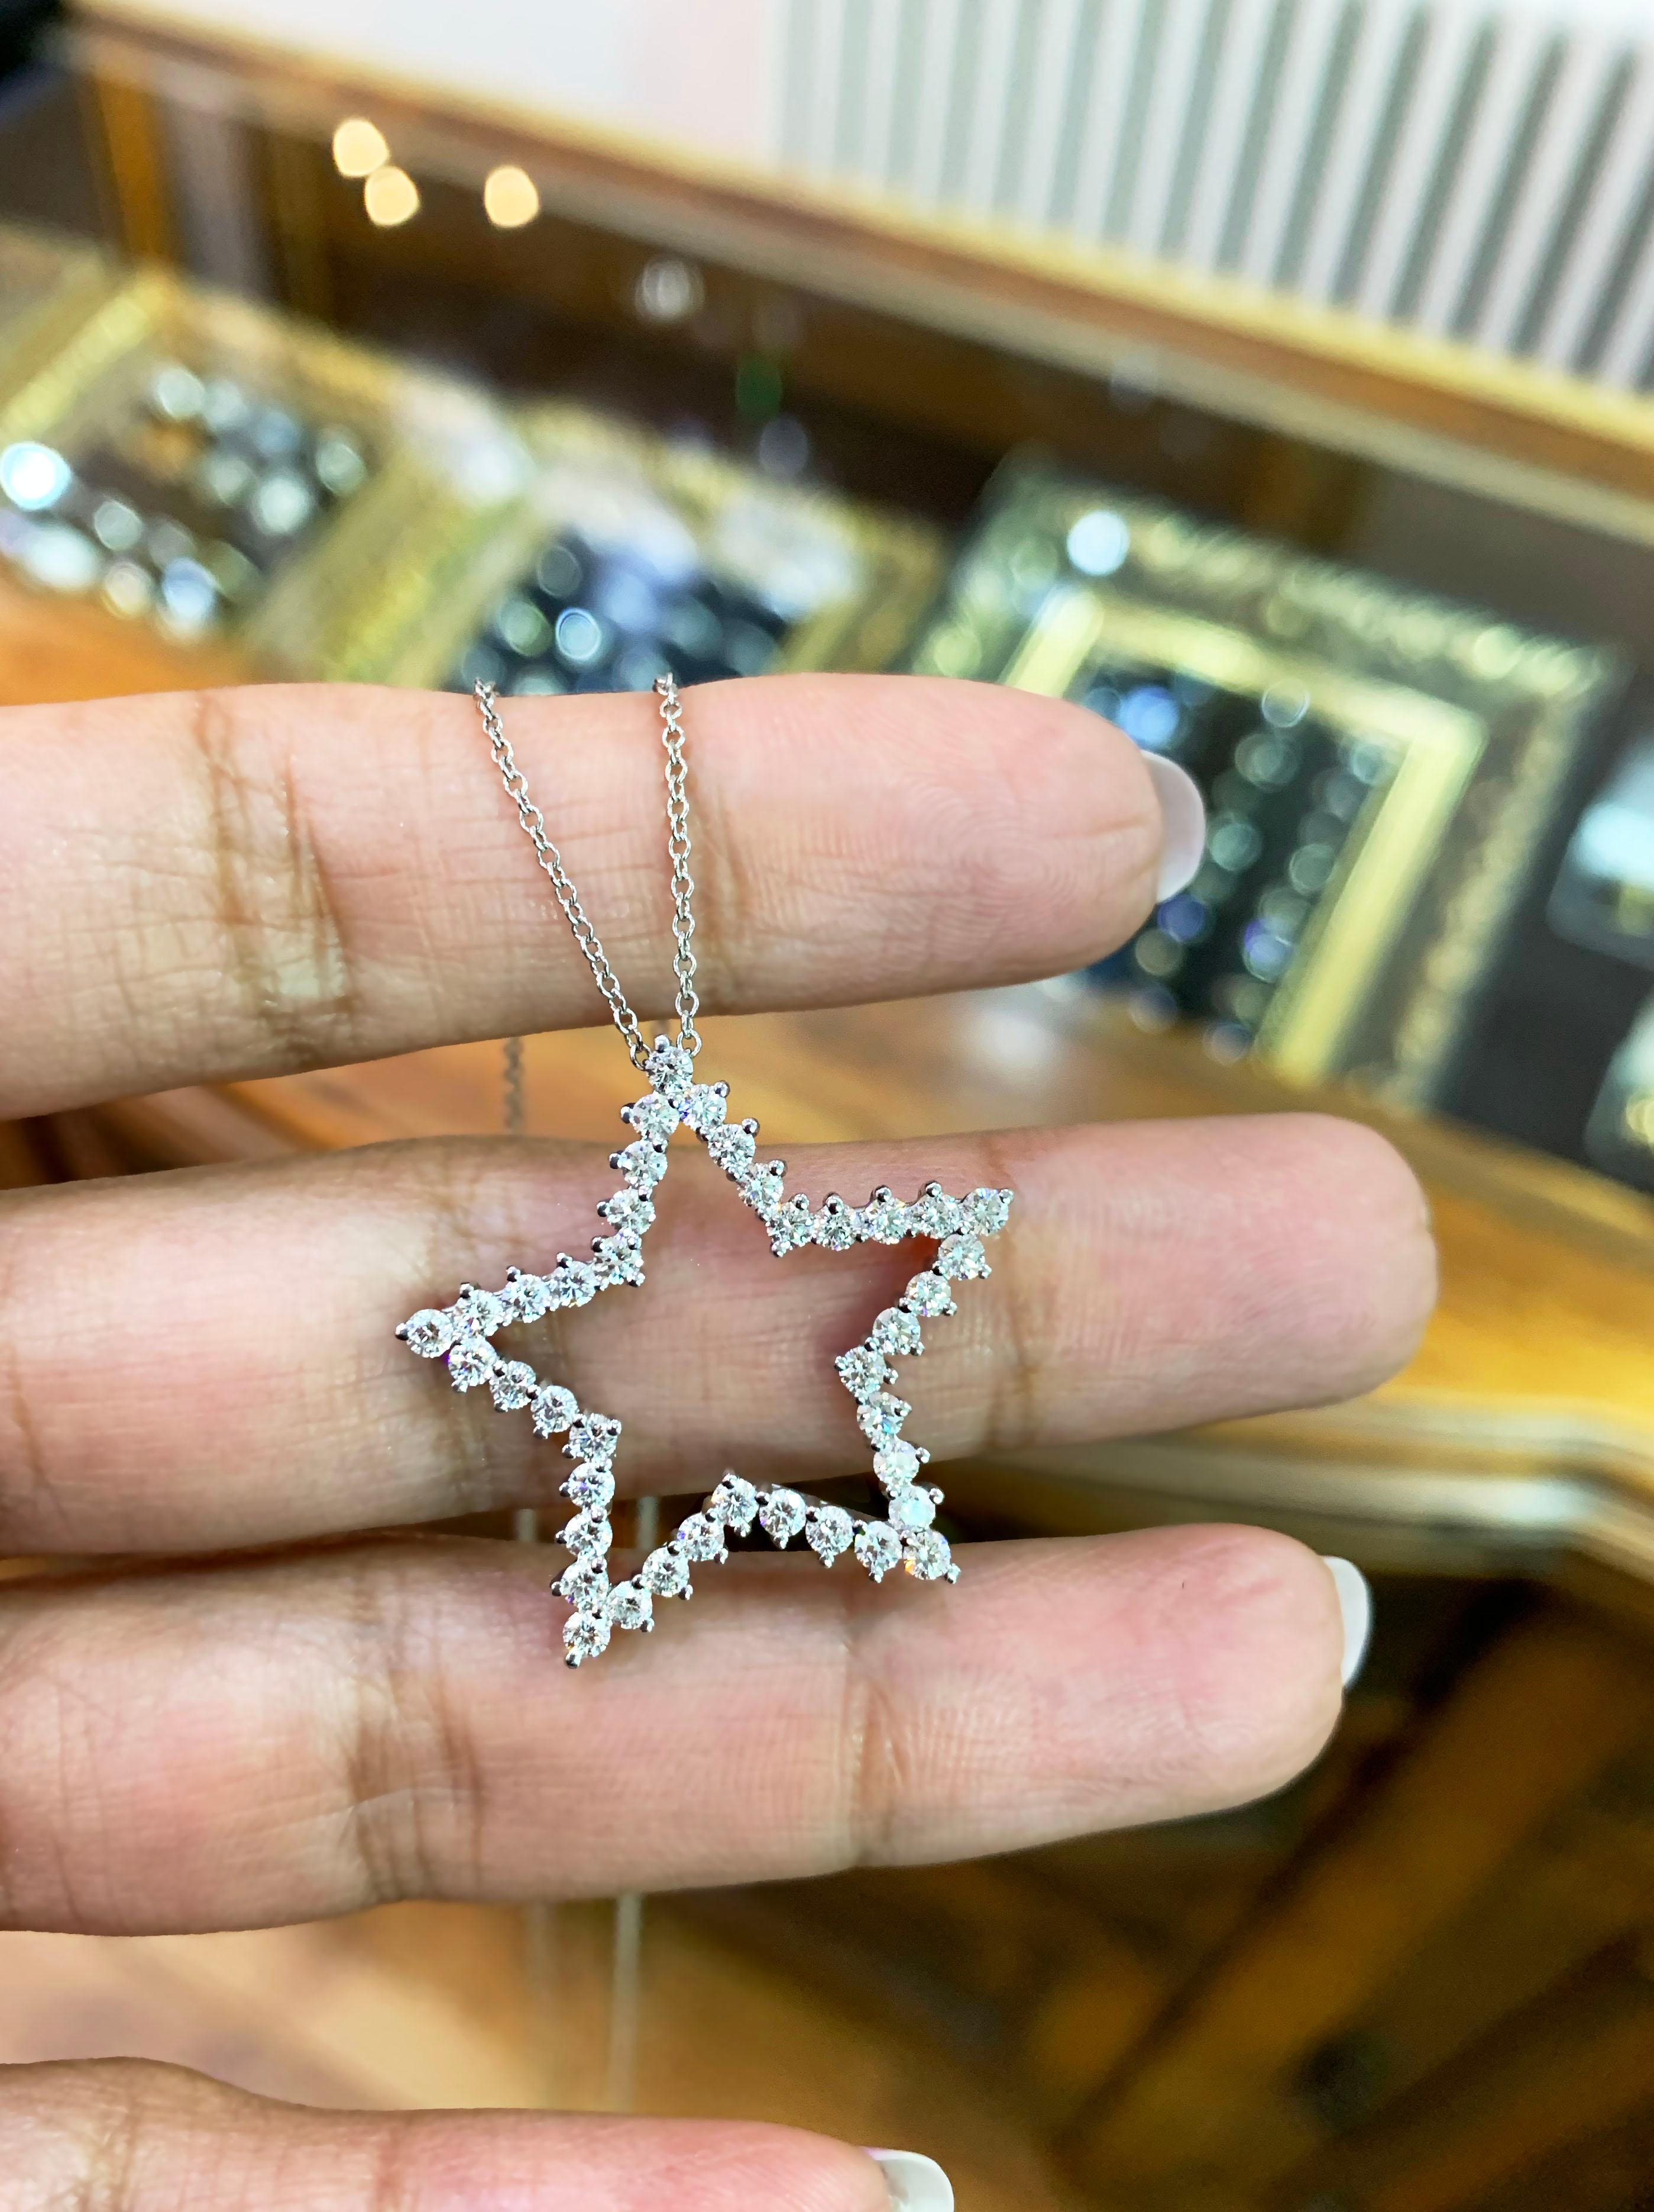 tiffany star necklace